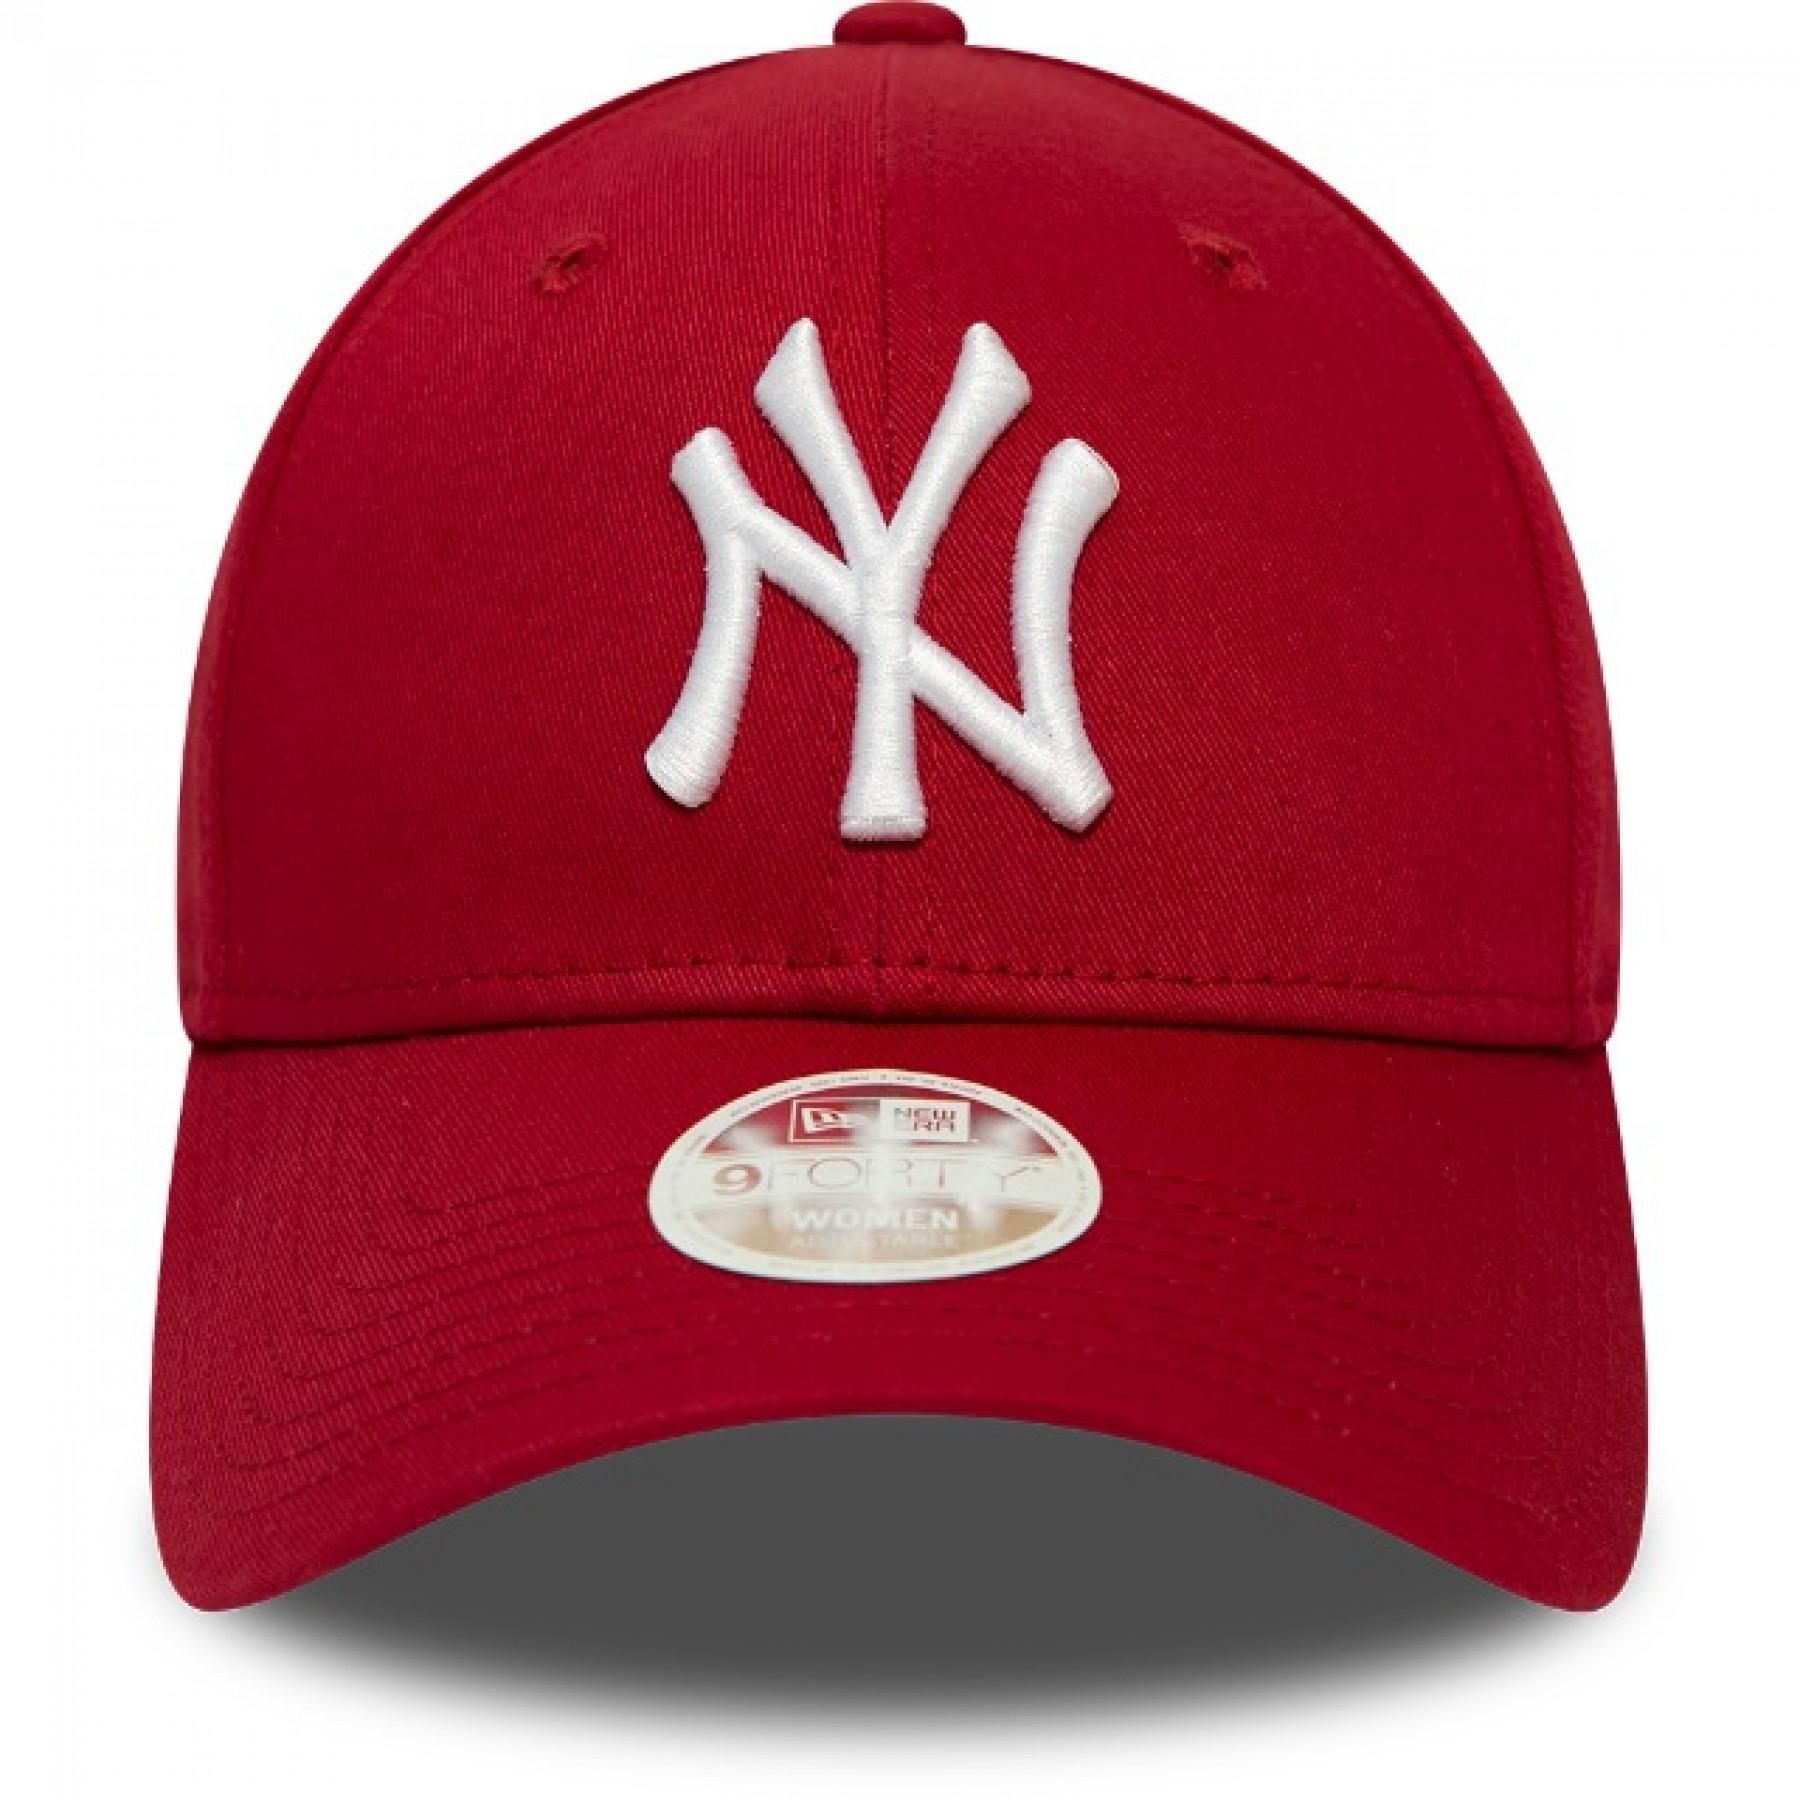 Women's cap New Era Yankees Essential 9forty